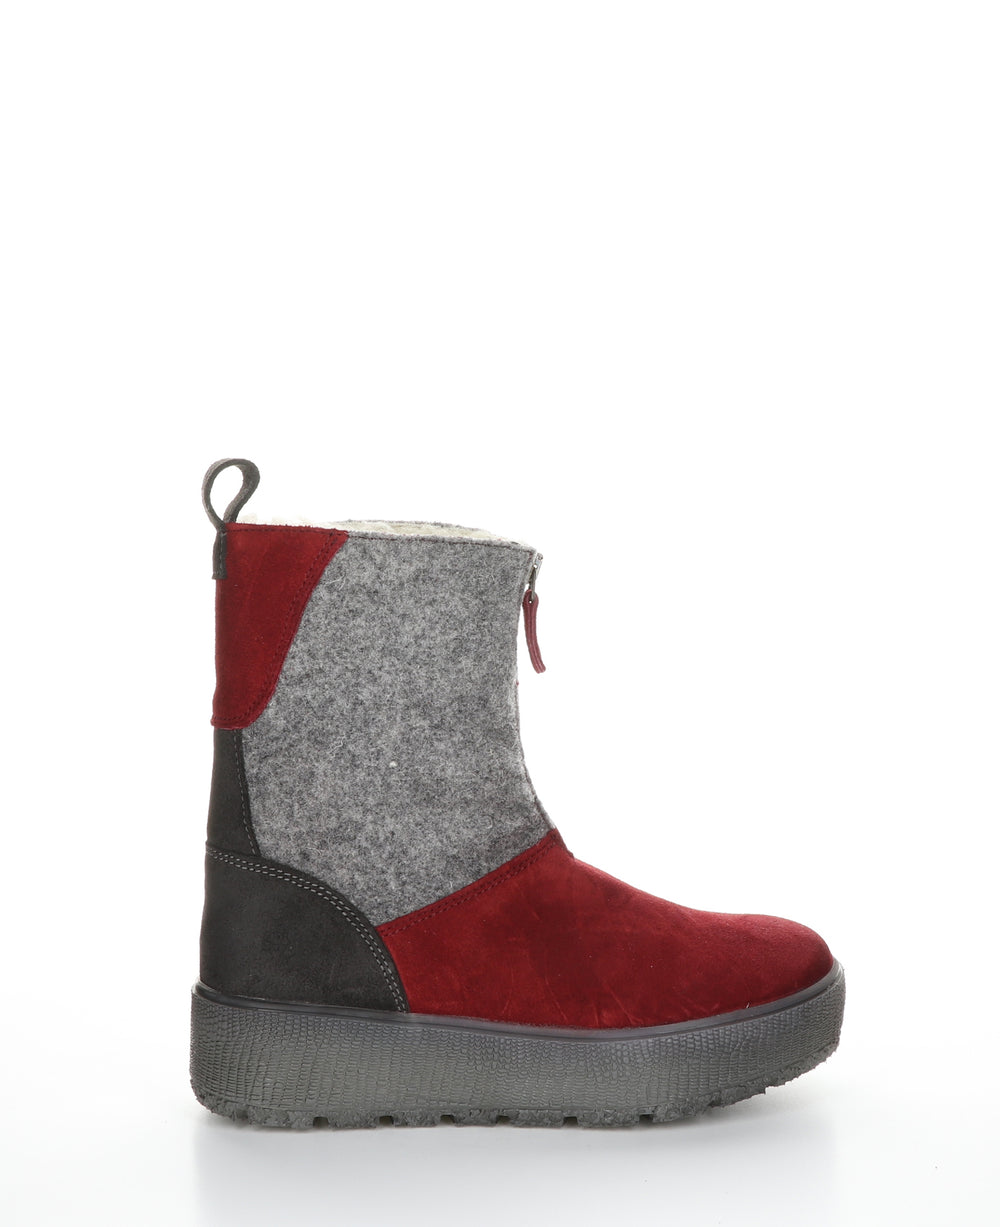 IGNITE Sangria/Grey Zip Up Boots|IGNITE Bottes avec Fermeture Zippée in Rouge